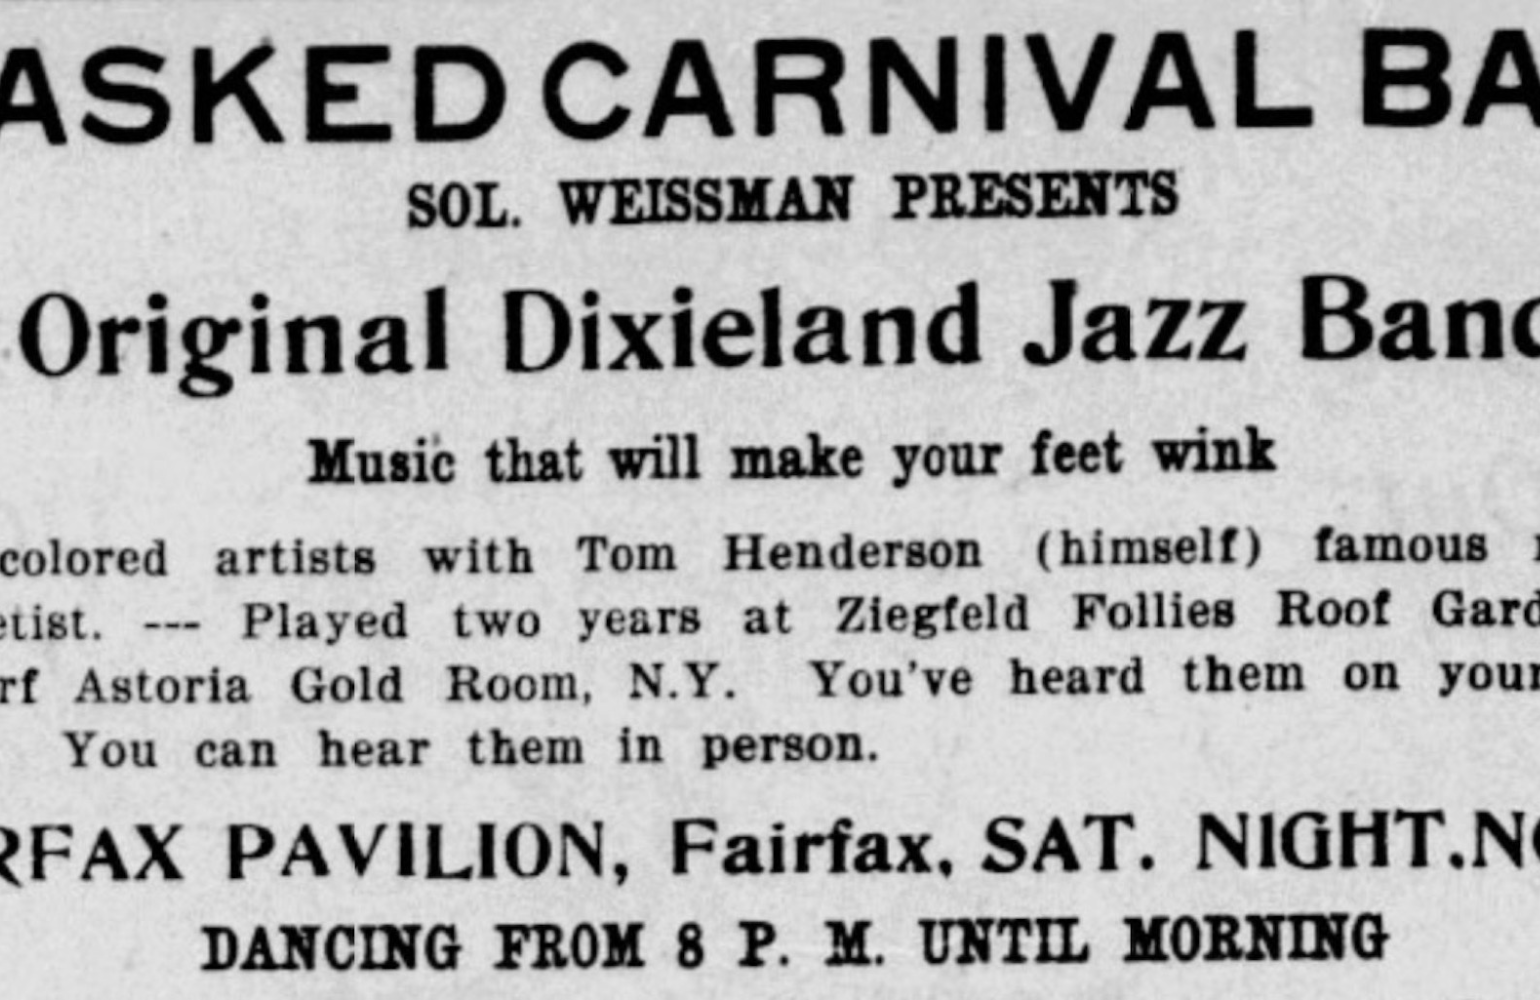 Original Dixieland Jazz Band in FX